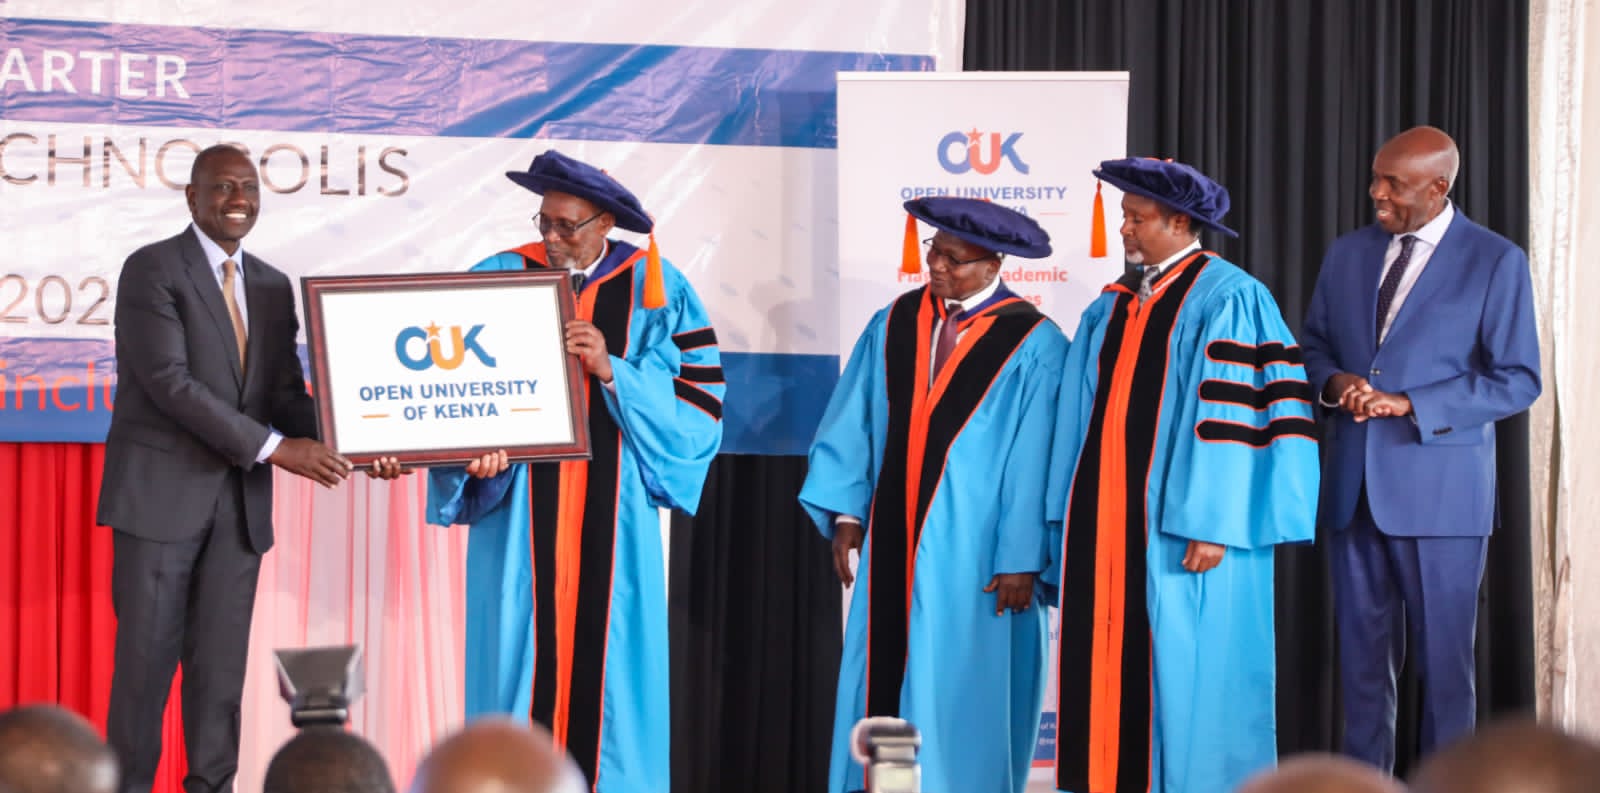 President William Ruto awards charter to Open University of Kenya.